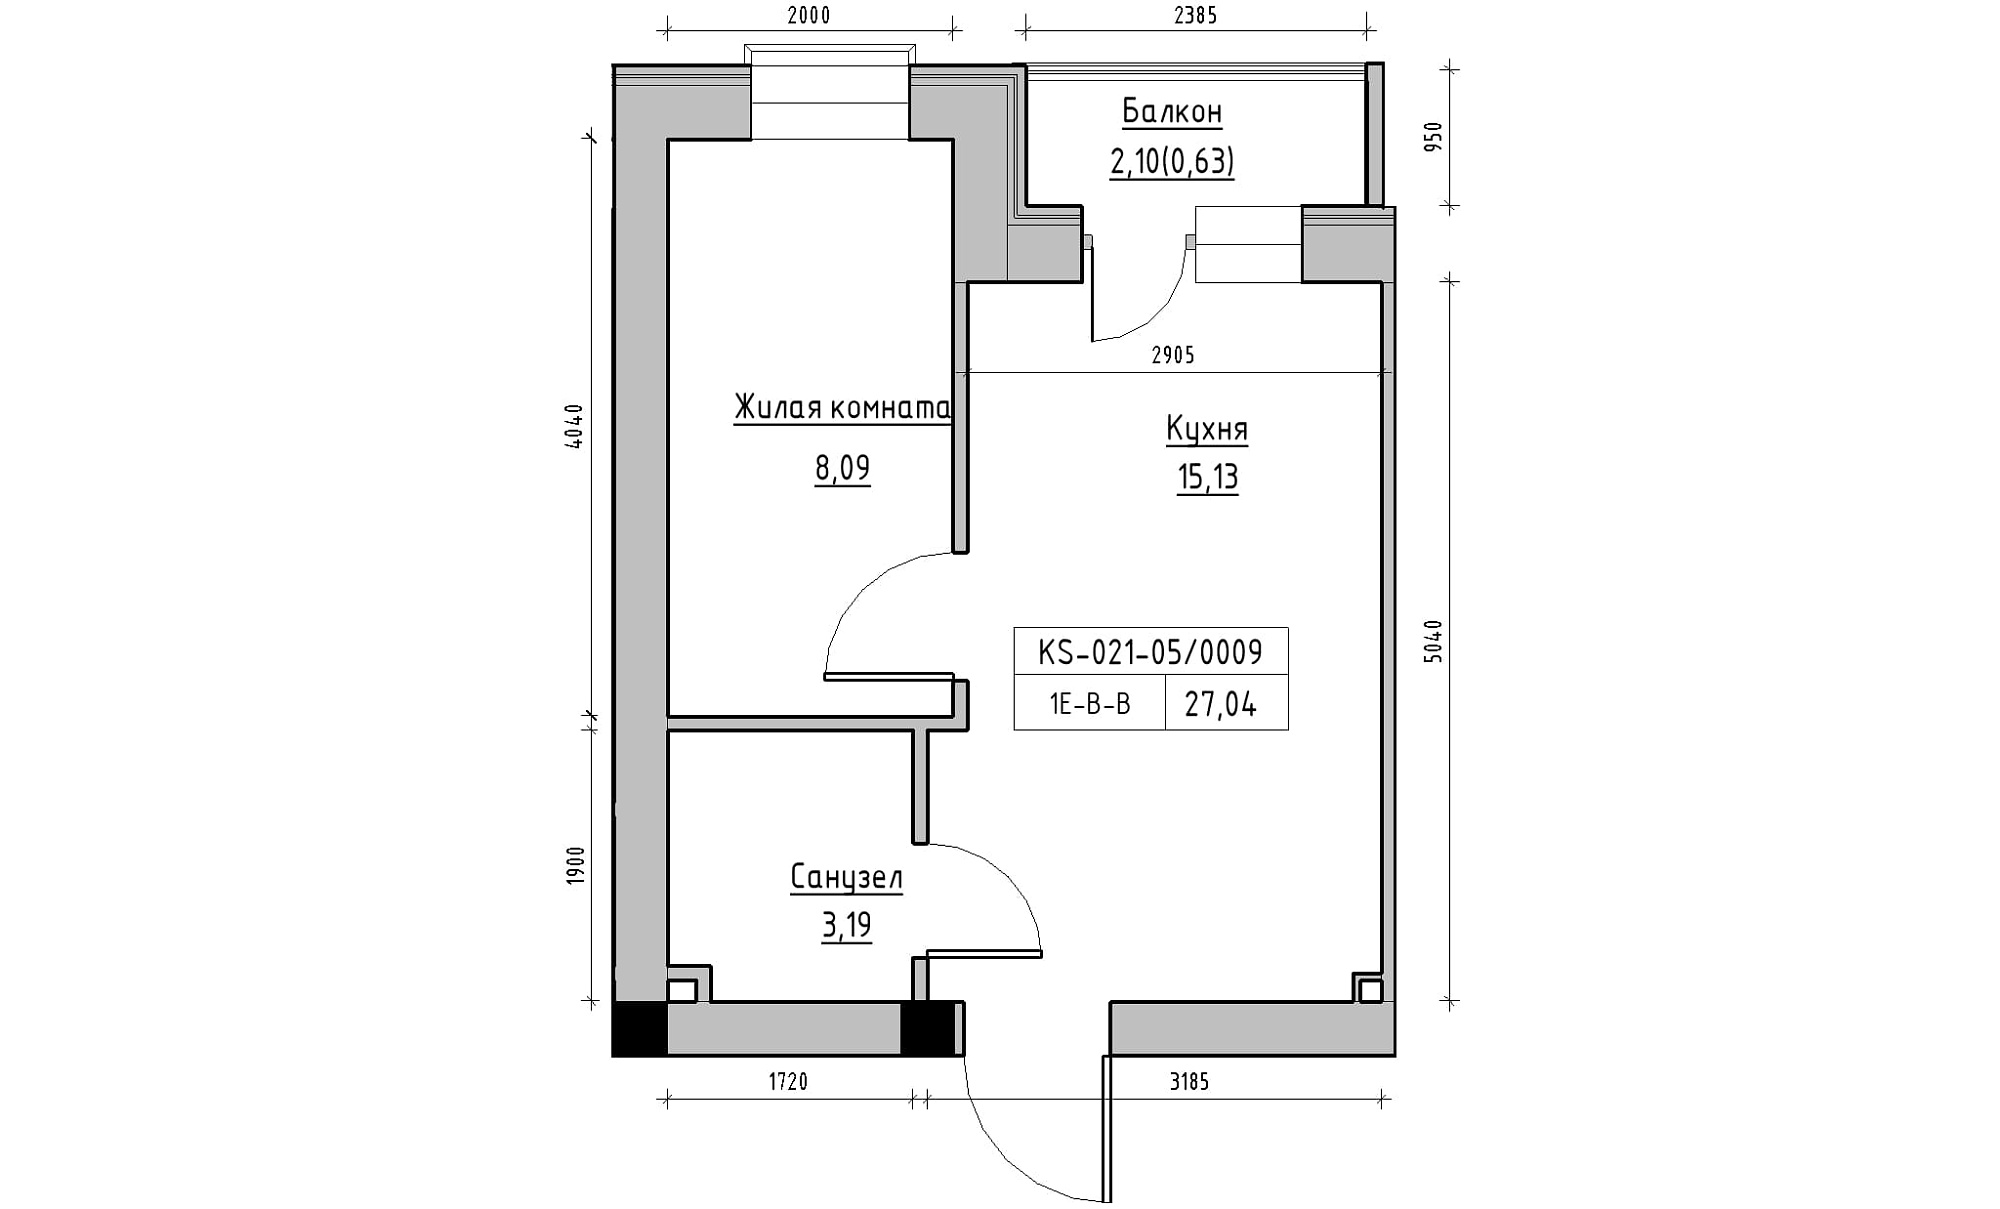 Planning 1-rm flats area 27.04m2, KS-021-05/0009.